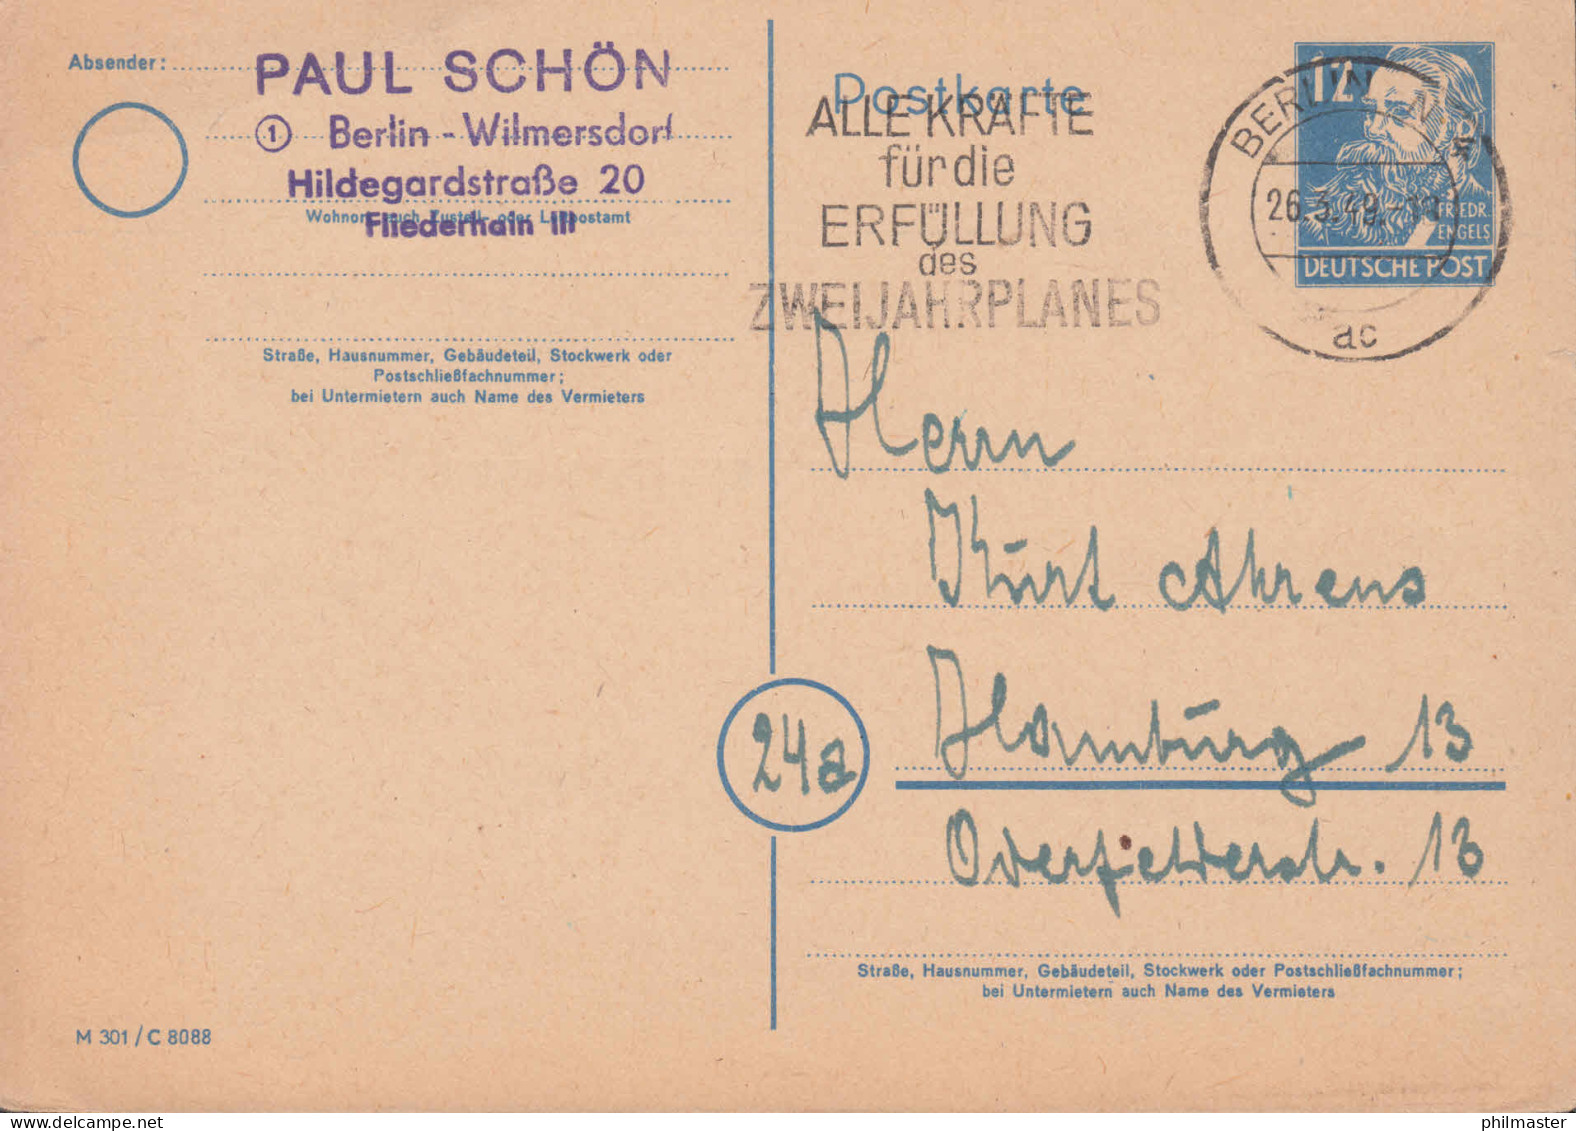 Postkarte P 36a/01 Engels 12 Pf DV M 301 / C 8088, BERLIN Zweijahrplan 26.3.49 - Lettres & Documents